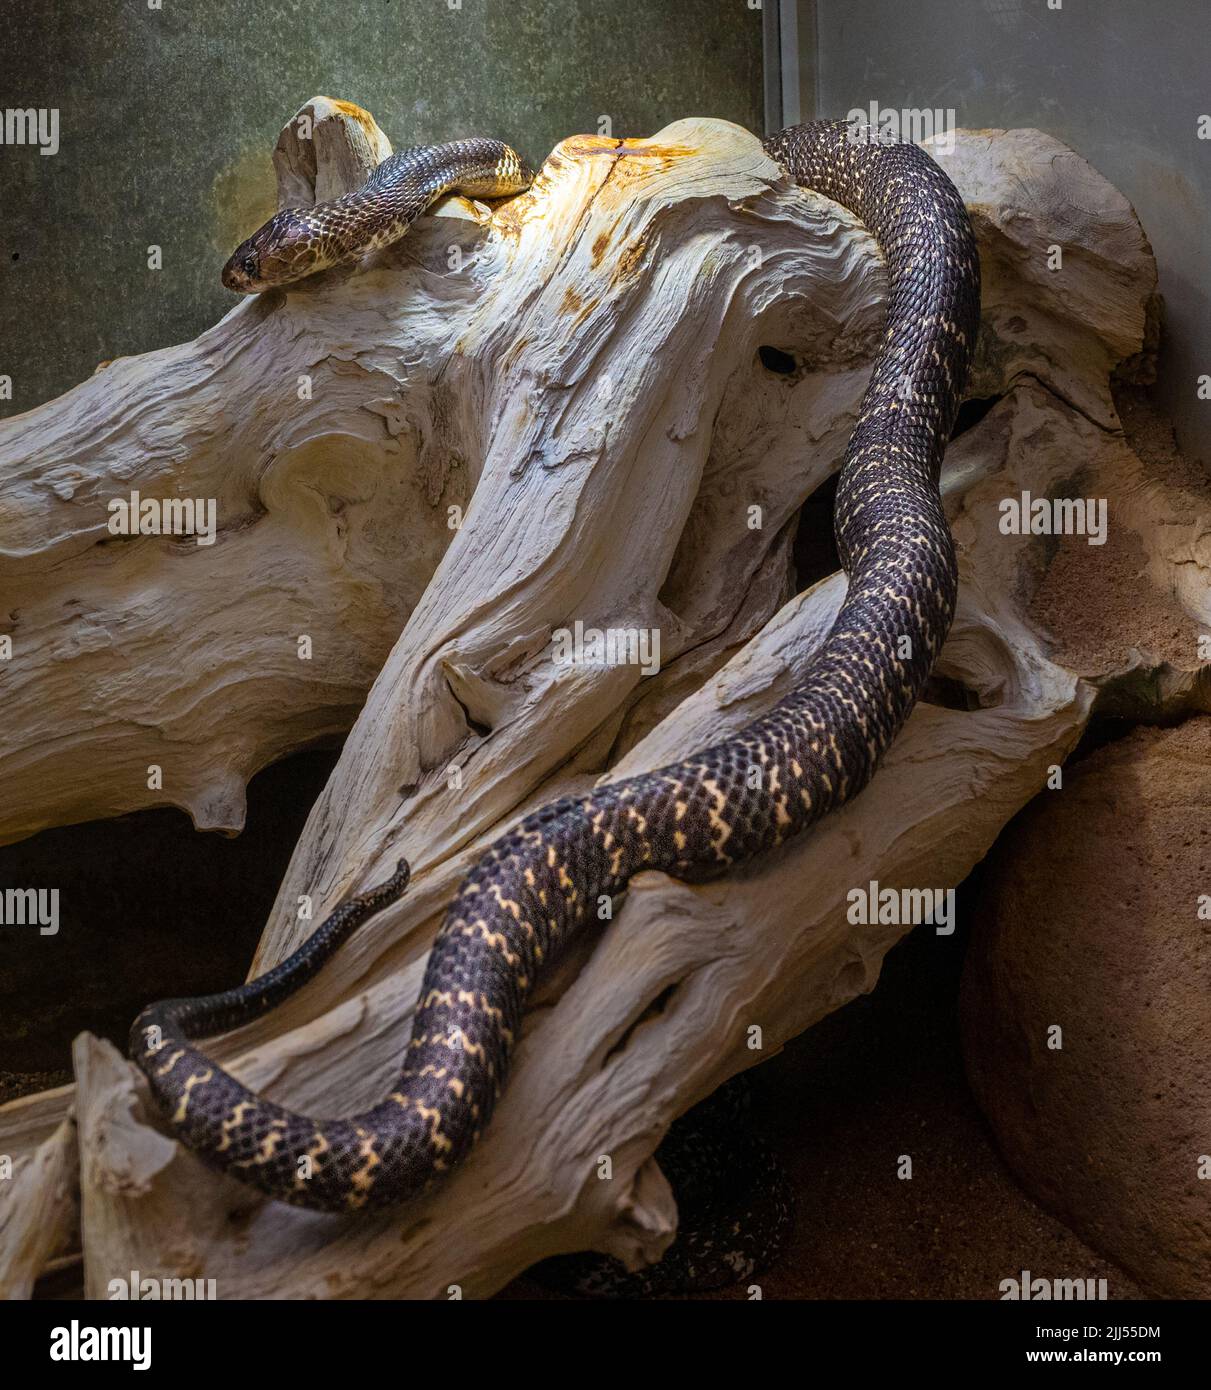 Naja naja è un genere di serpenti velenosi. Foto Stock